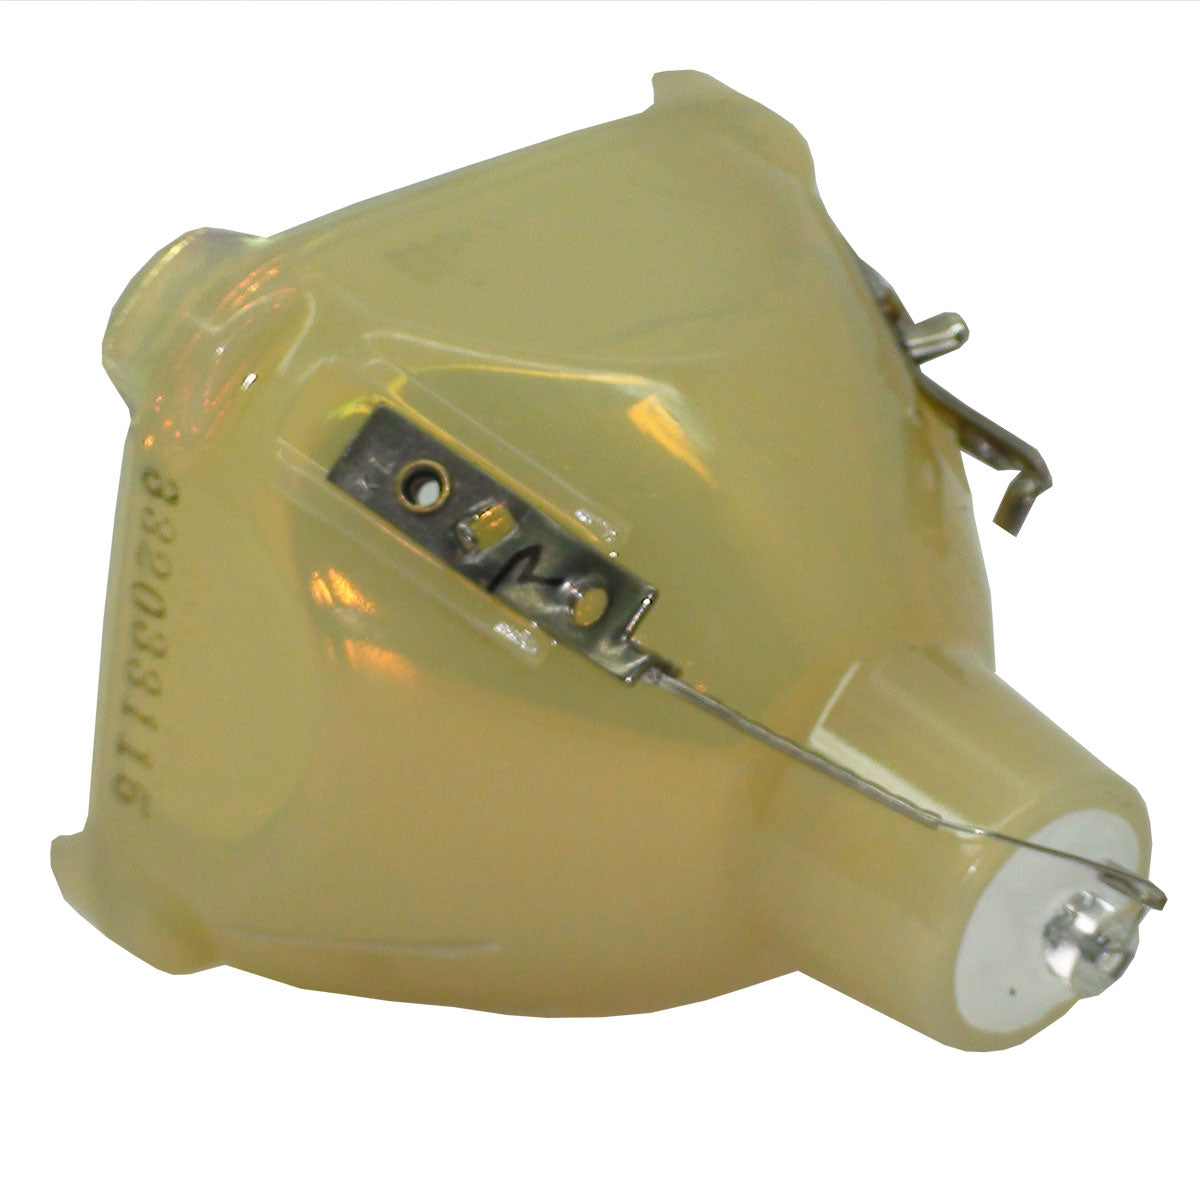 Geha 60-248940 Philips Projector Bare Lamp